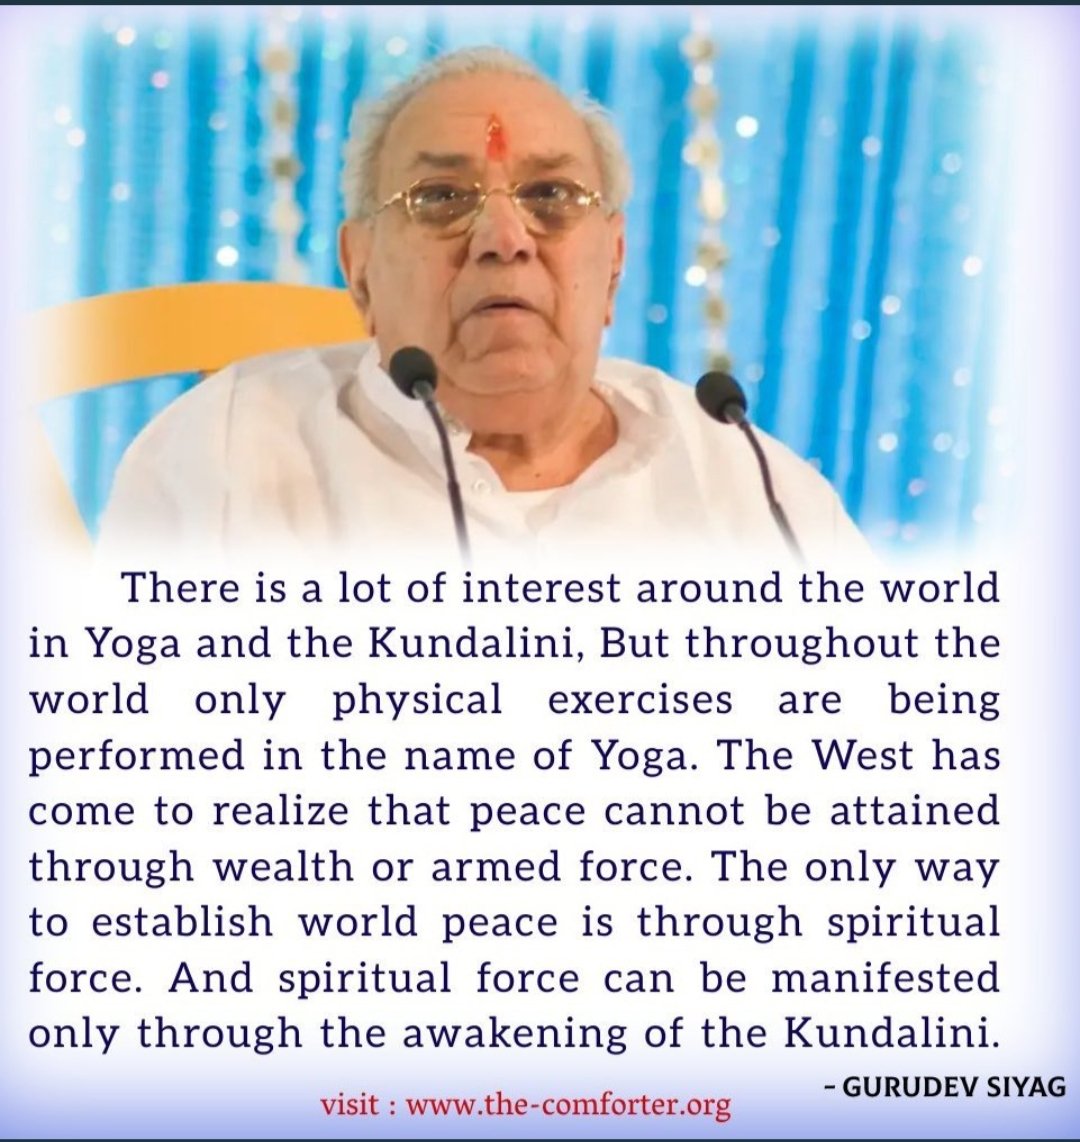 🌹 Jai Gurudev 🔱
The only way to establish world peace is through Spiritual Force. And spiritual force can be manifested only through the awakening of the Kundalini. 
Gurudev Siyag